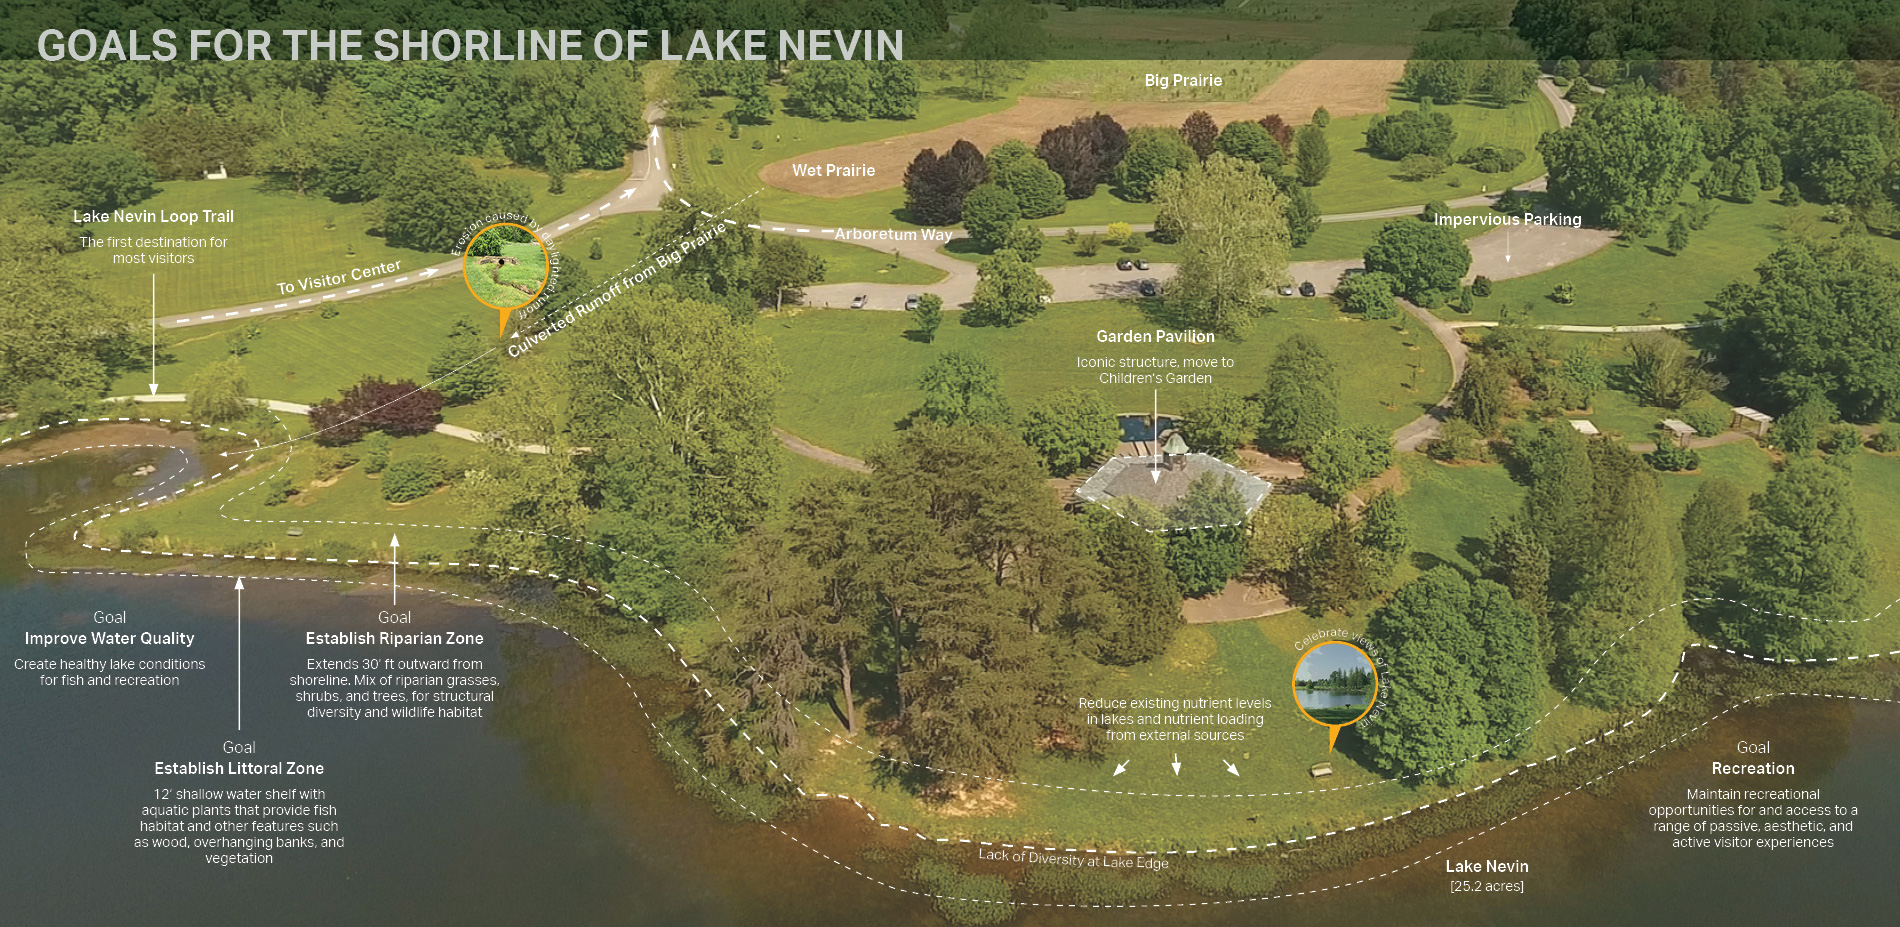 Goals for the Shoreline of Lake Nevin